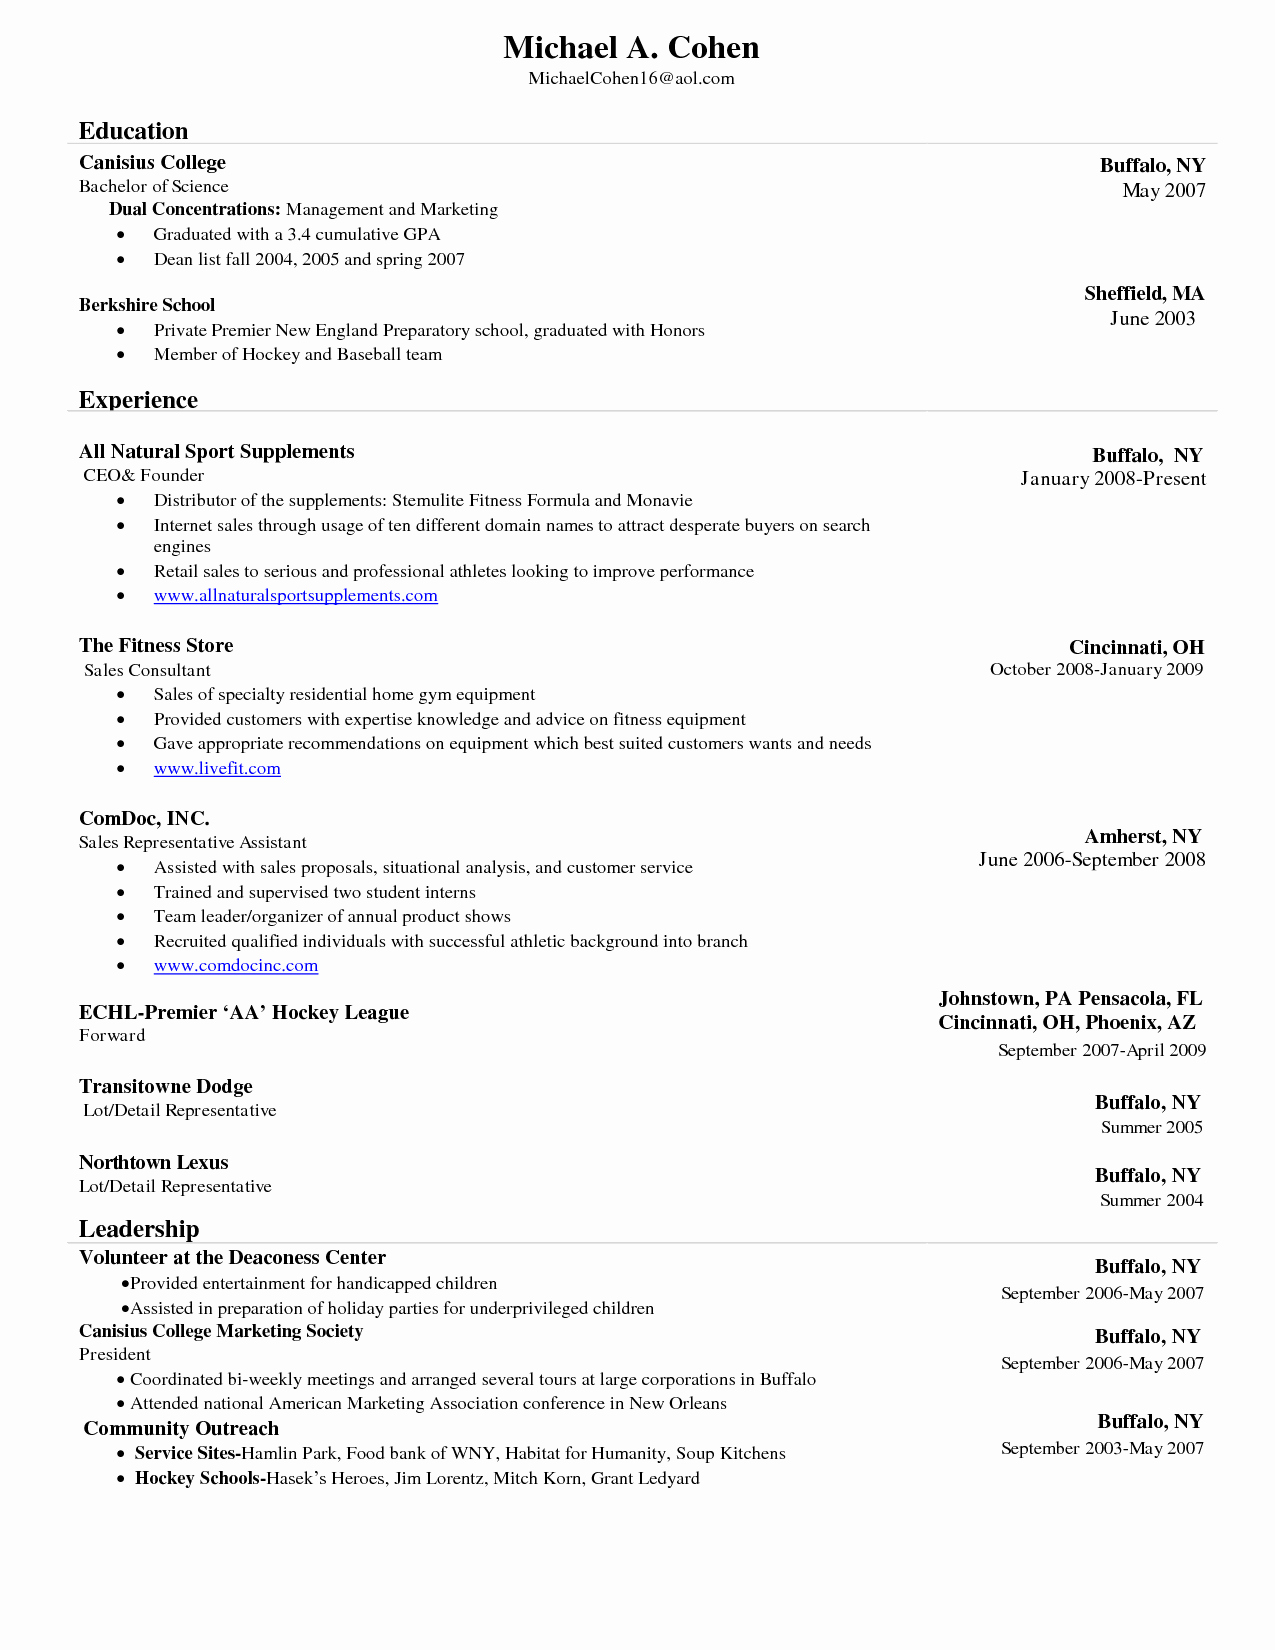 Microsoft Word Resume Template 2007